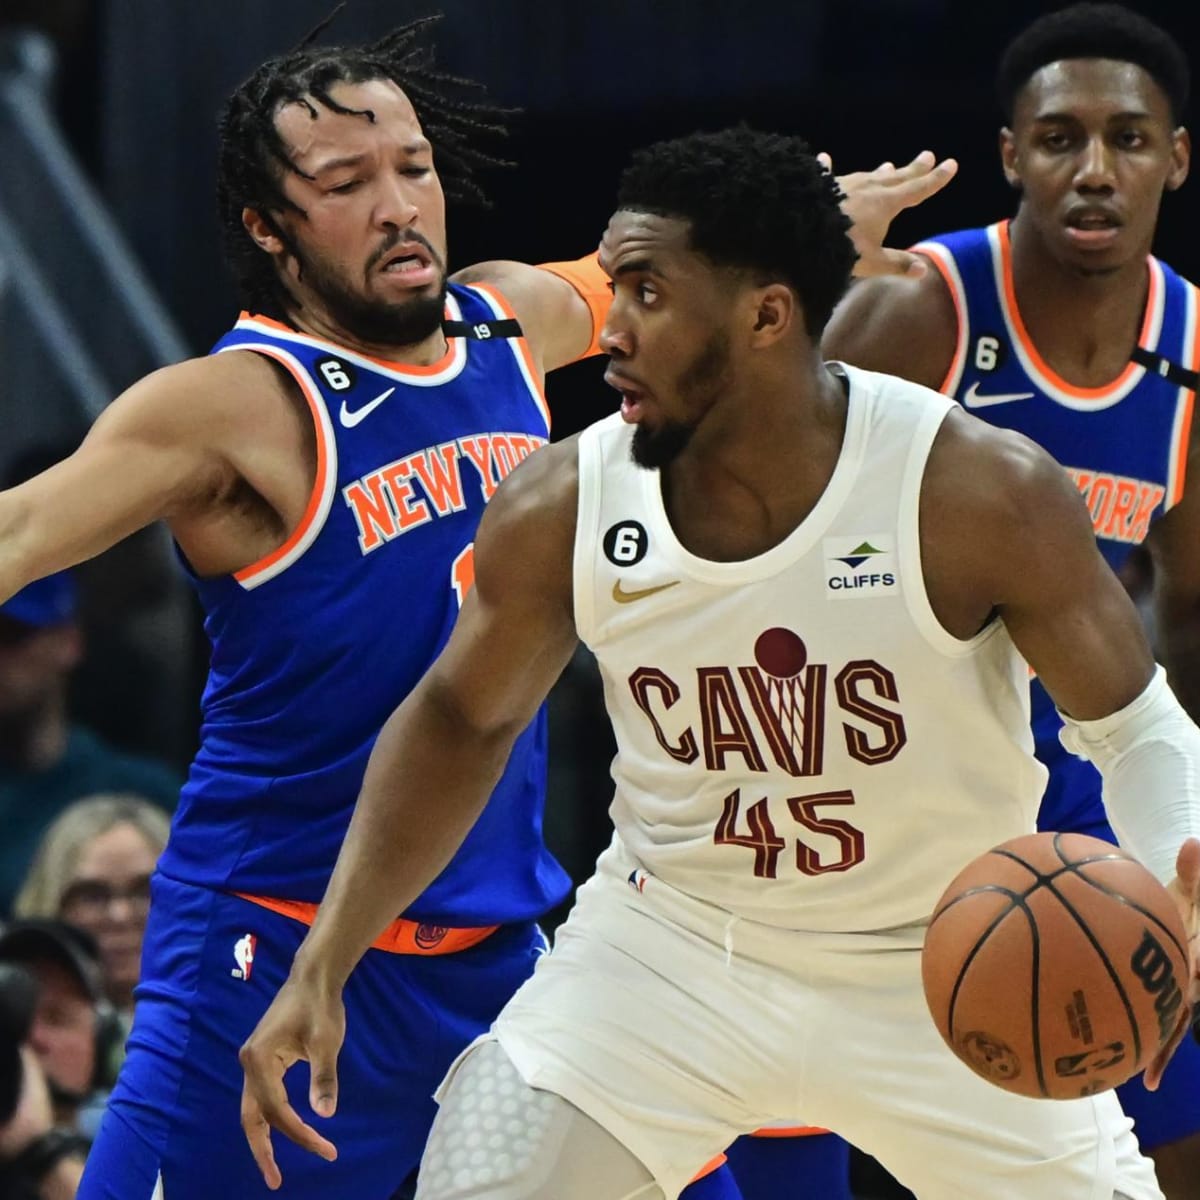 Knicks move closer to playoffs behind Brunson's 48 vs. Cavs